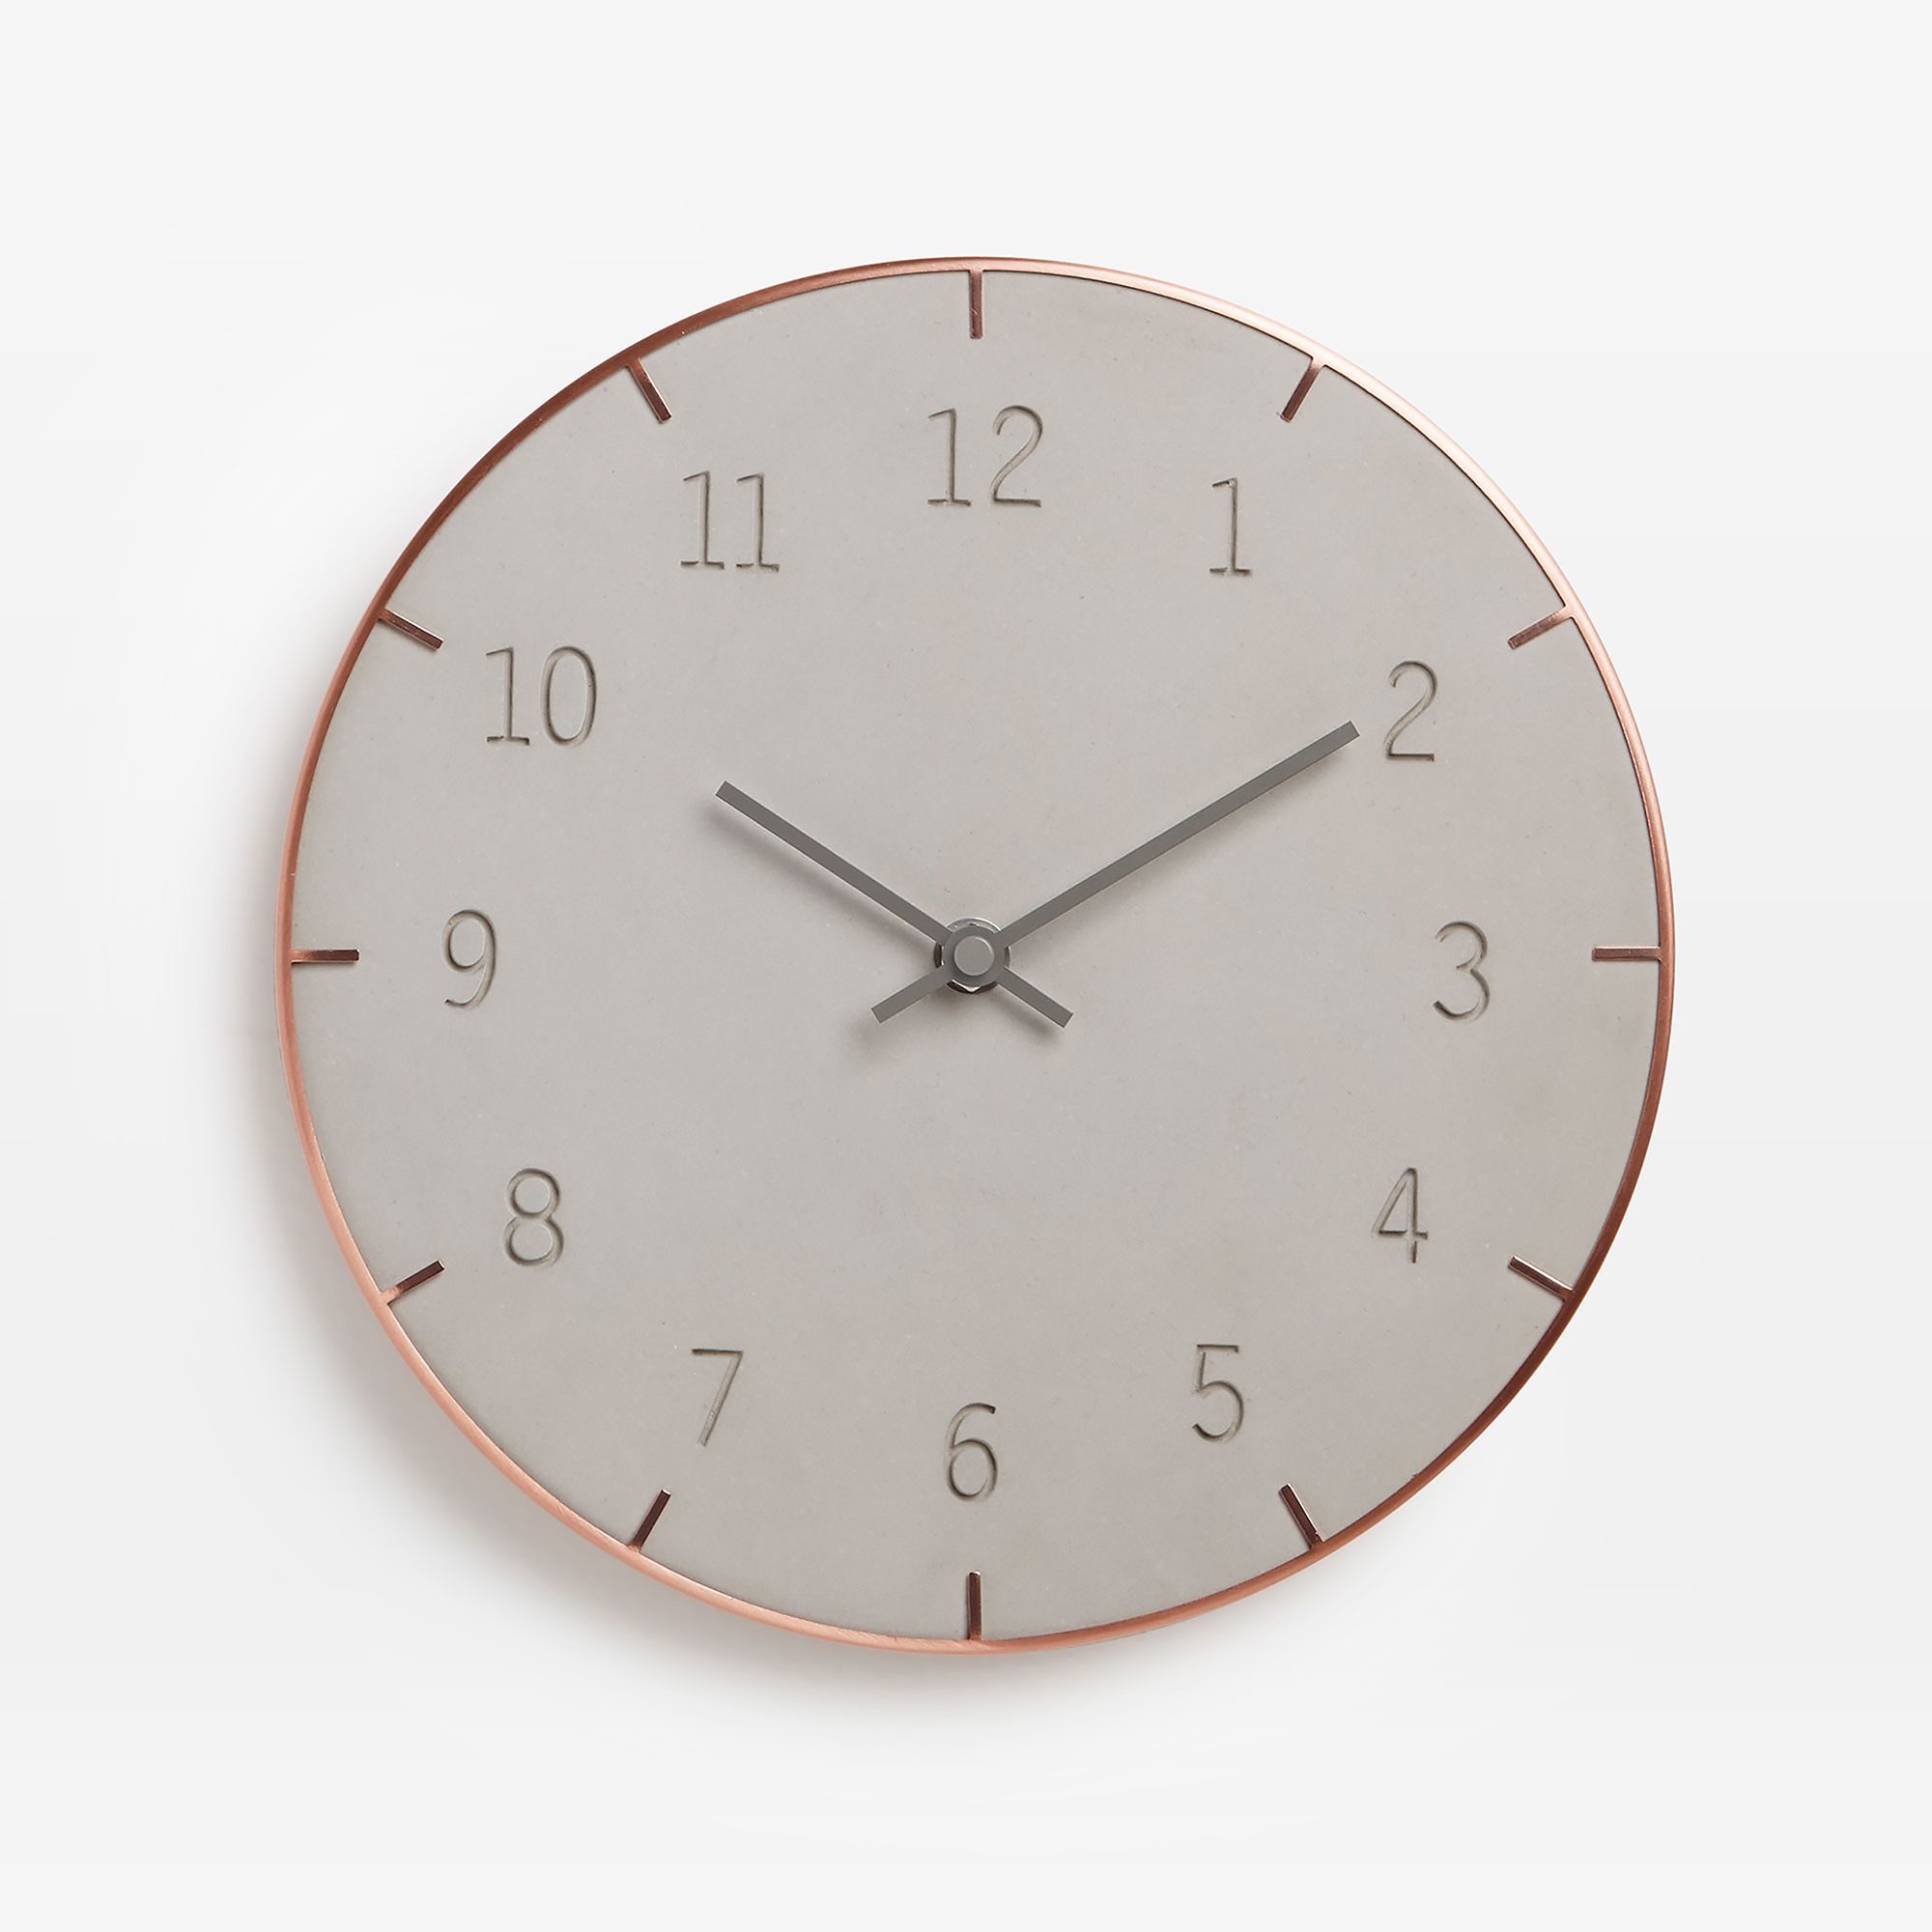 15 Best Kitchen Wall Clocks Stylish Clock Ideas For Kitchens